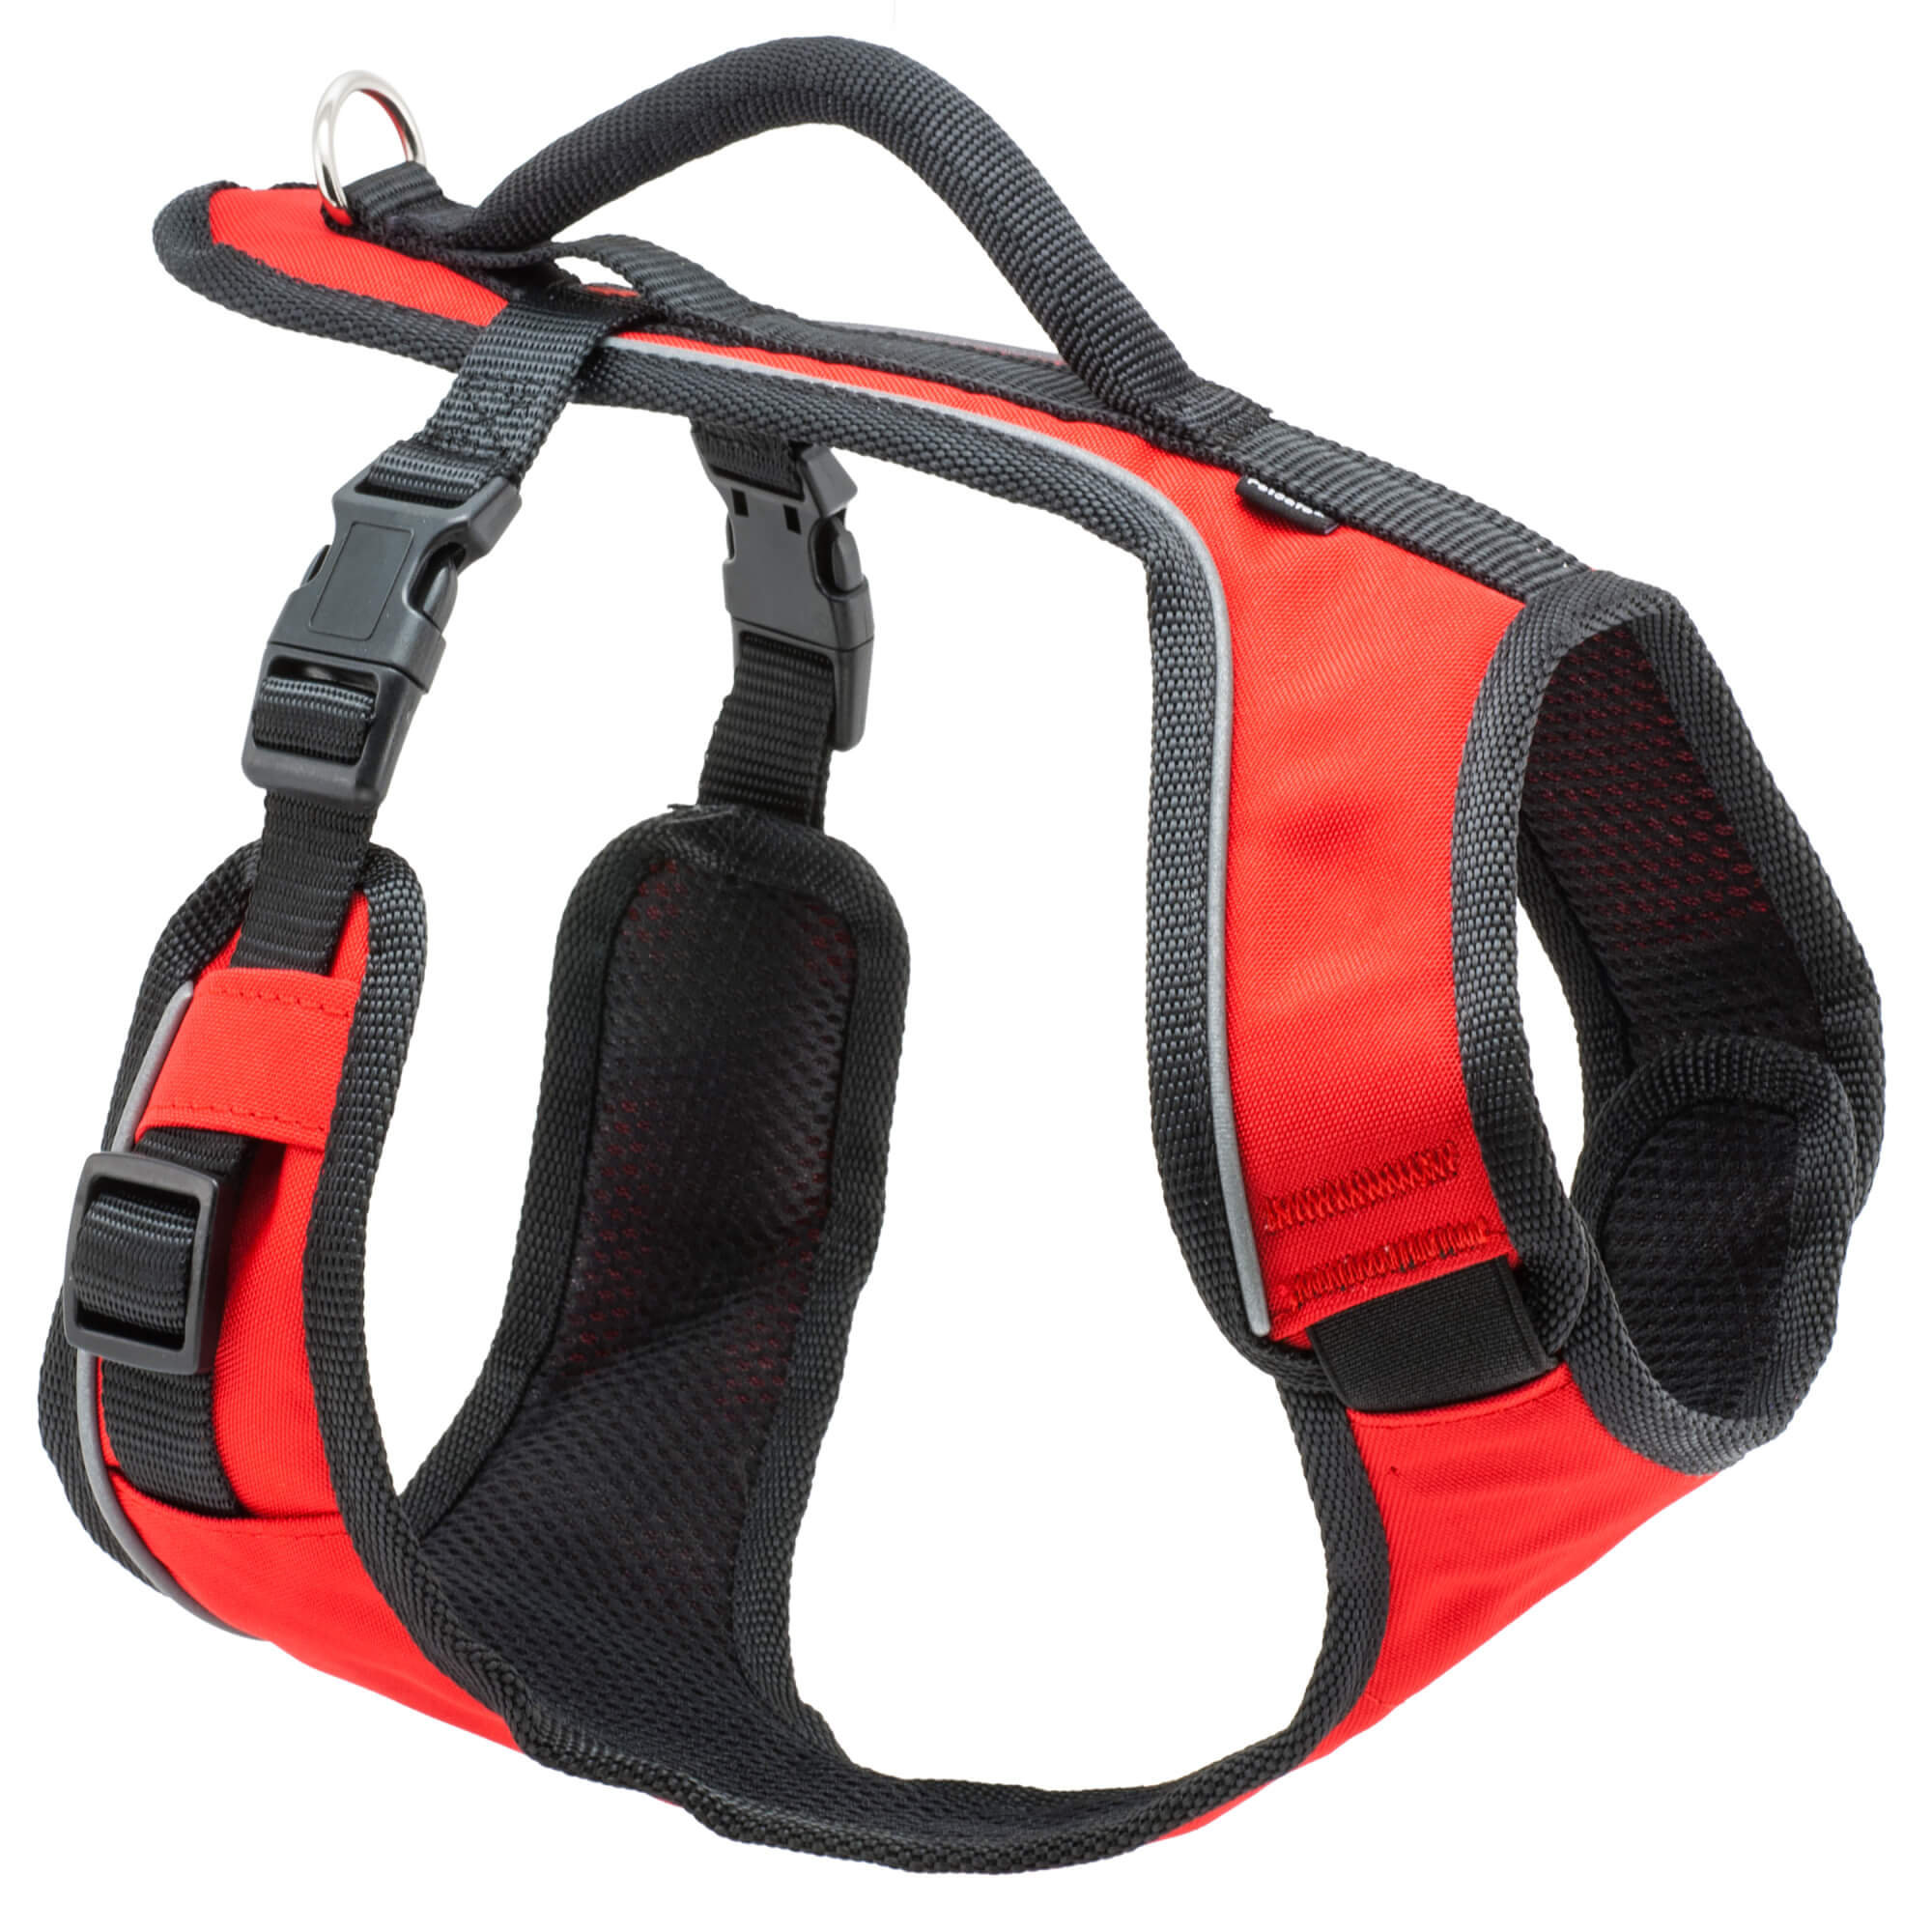 Red petsafe easysport harness in large